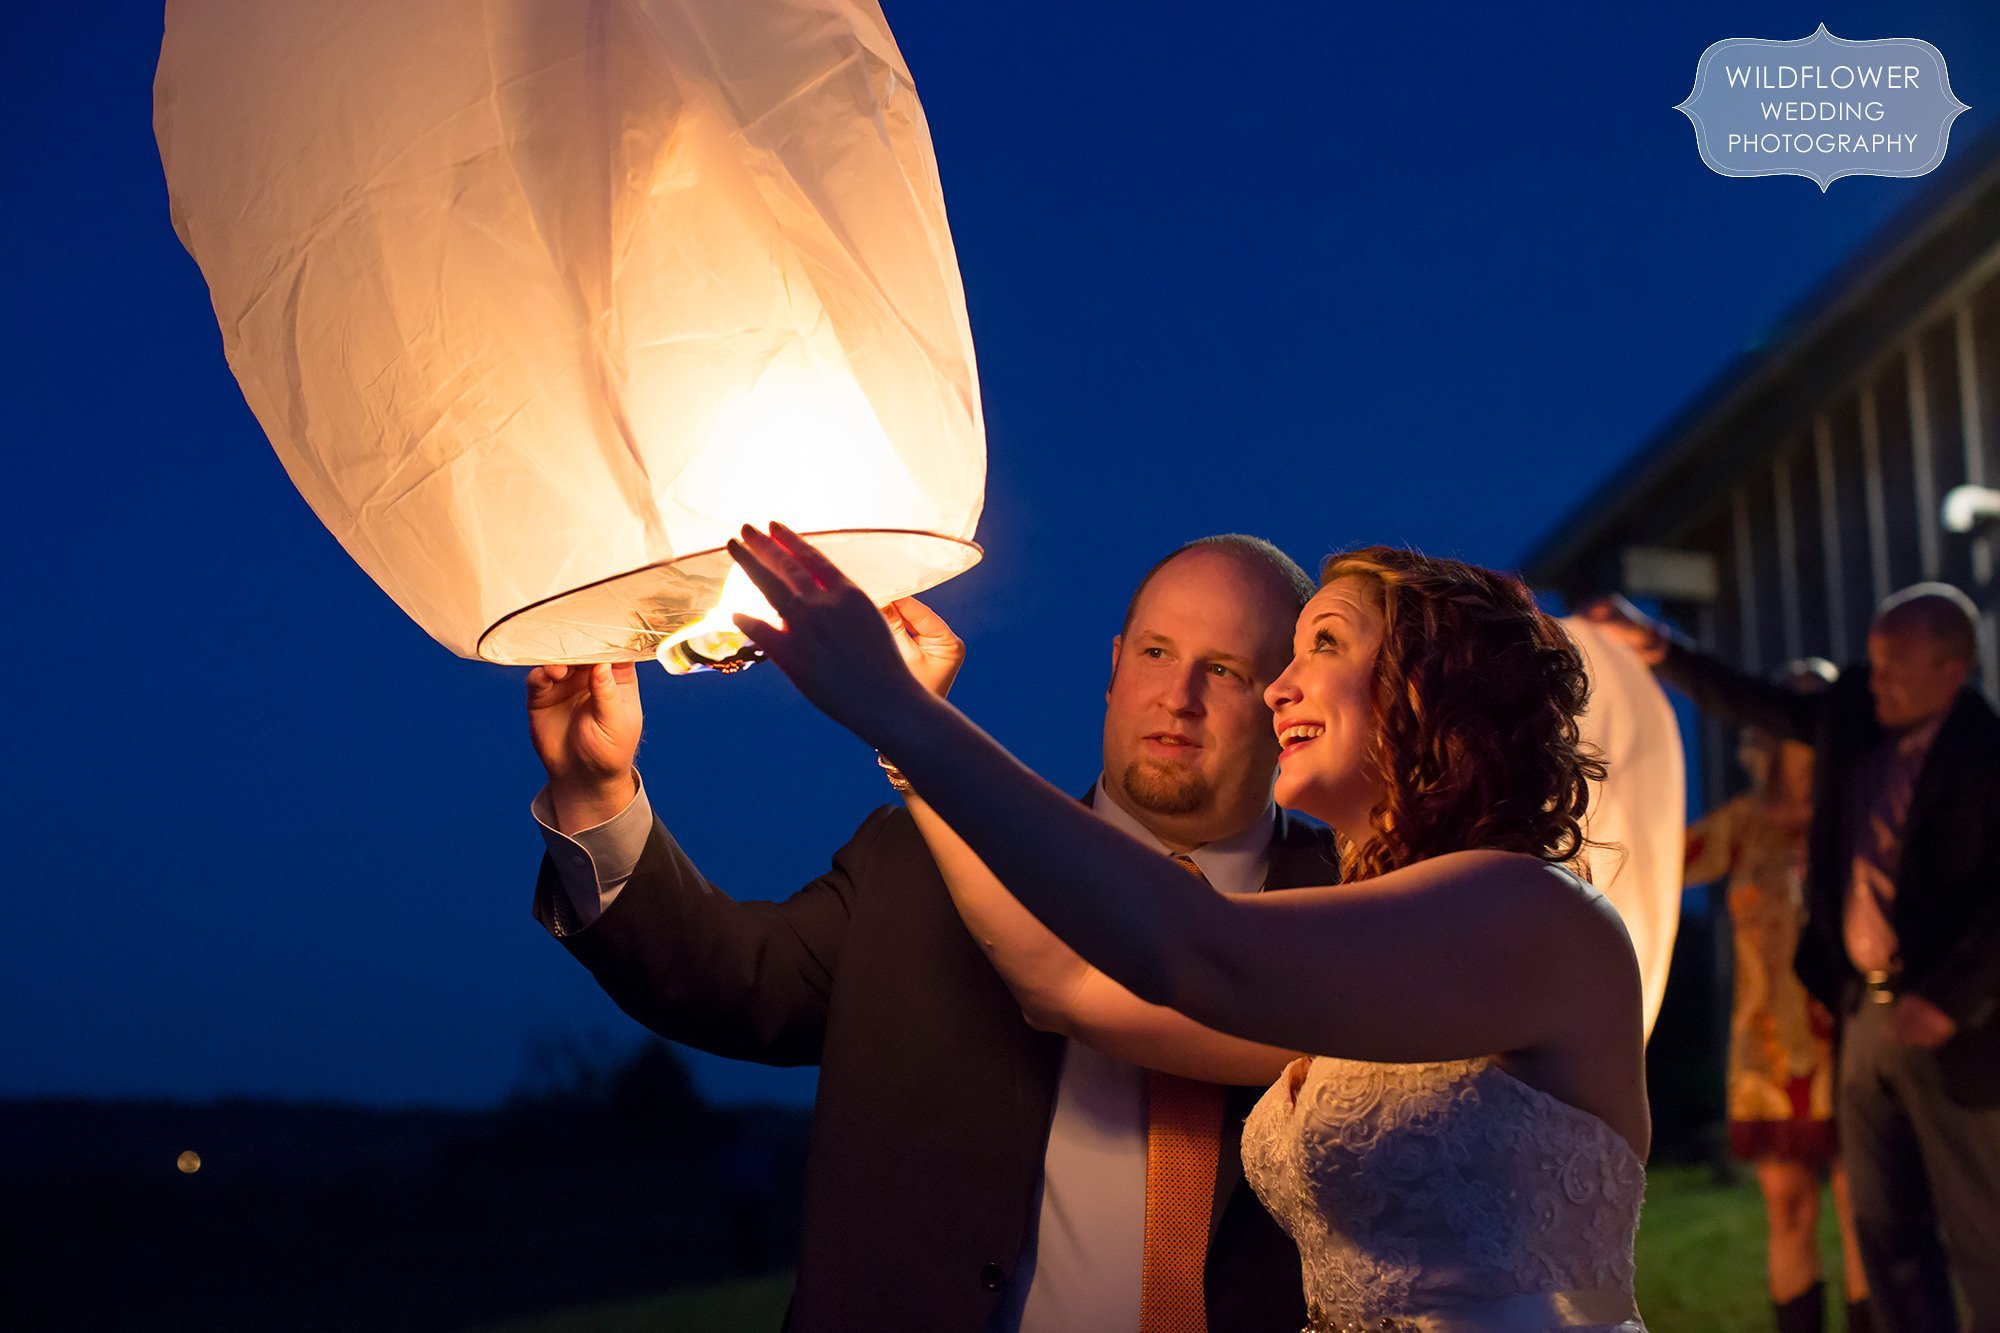 The bride and groom set off their Chinese wish lantern behind the Schwinn Produce Farm barn in Leavenworth, KS.